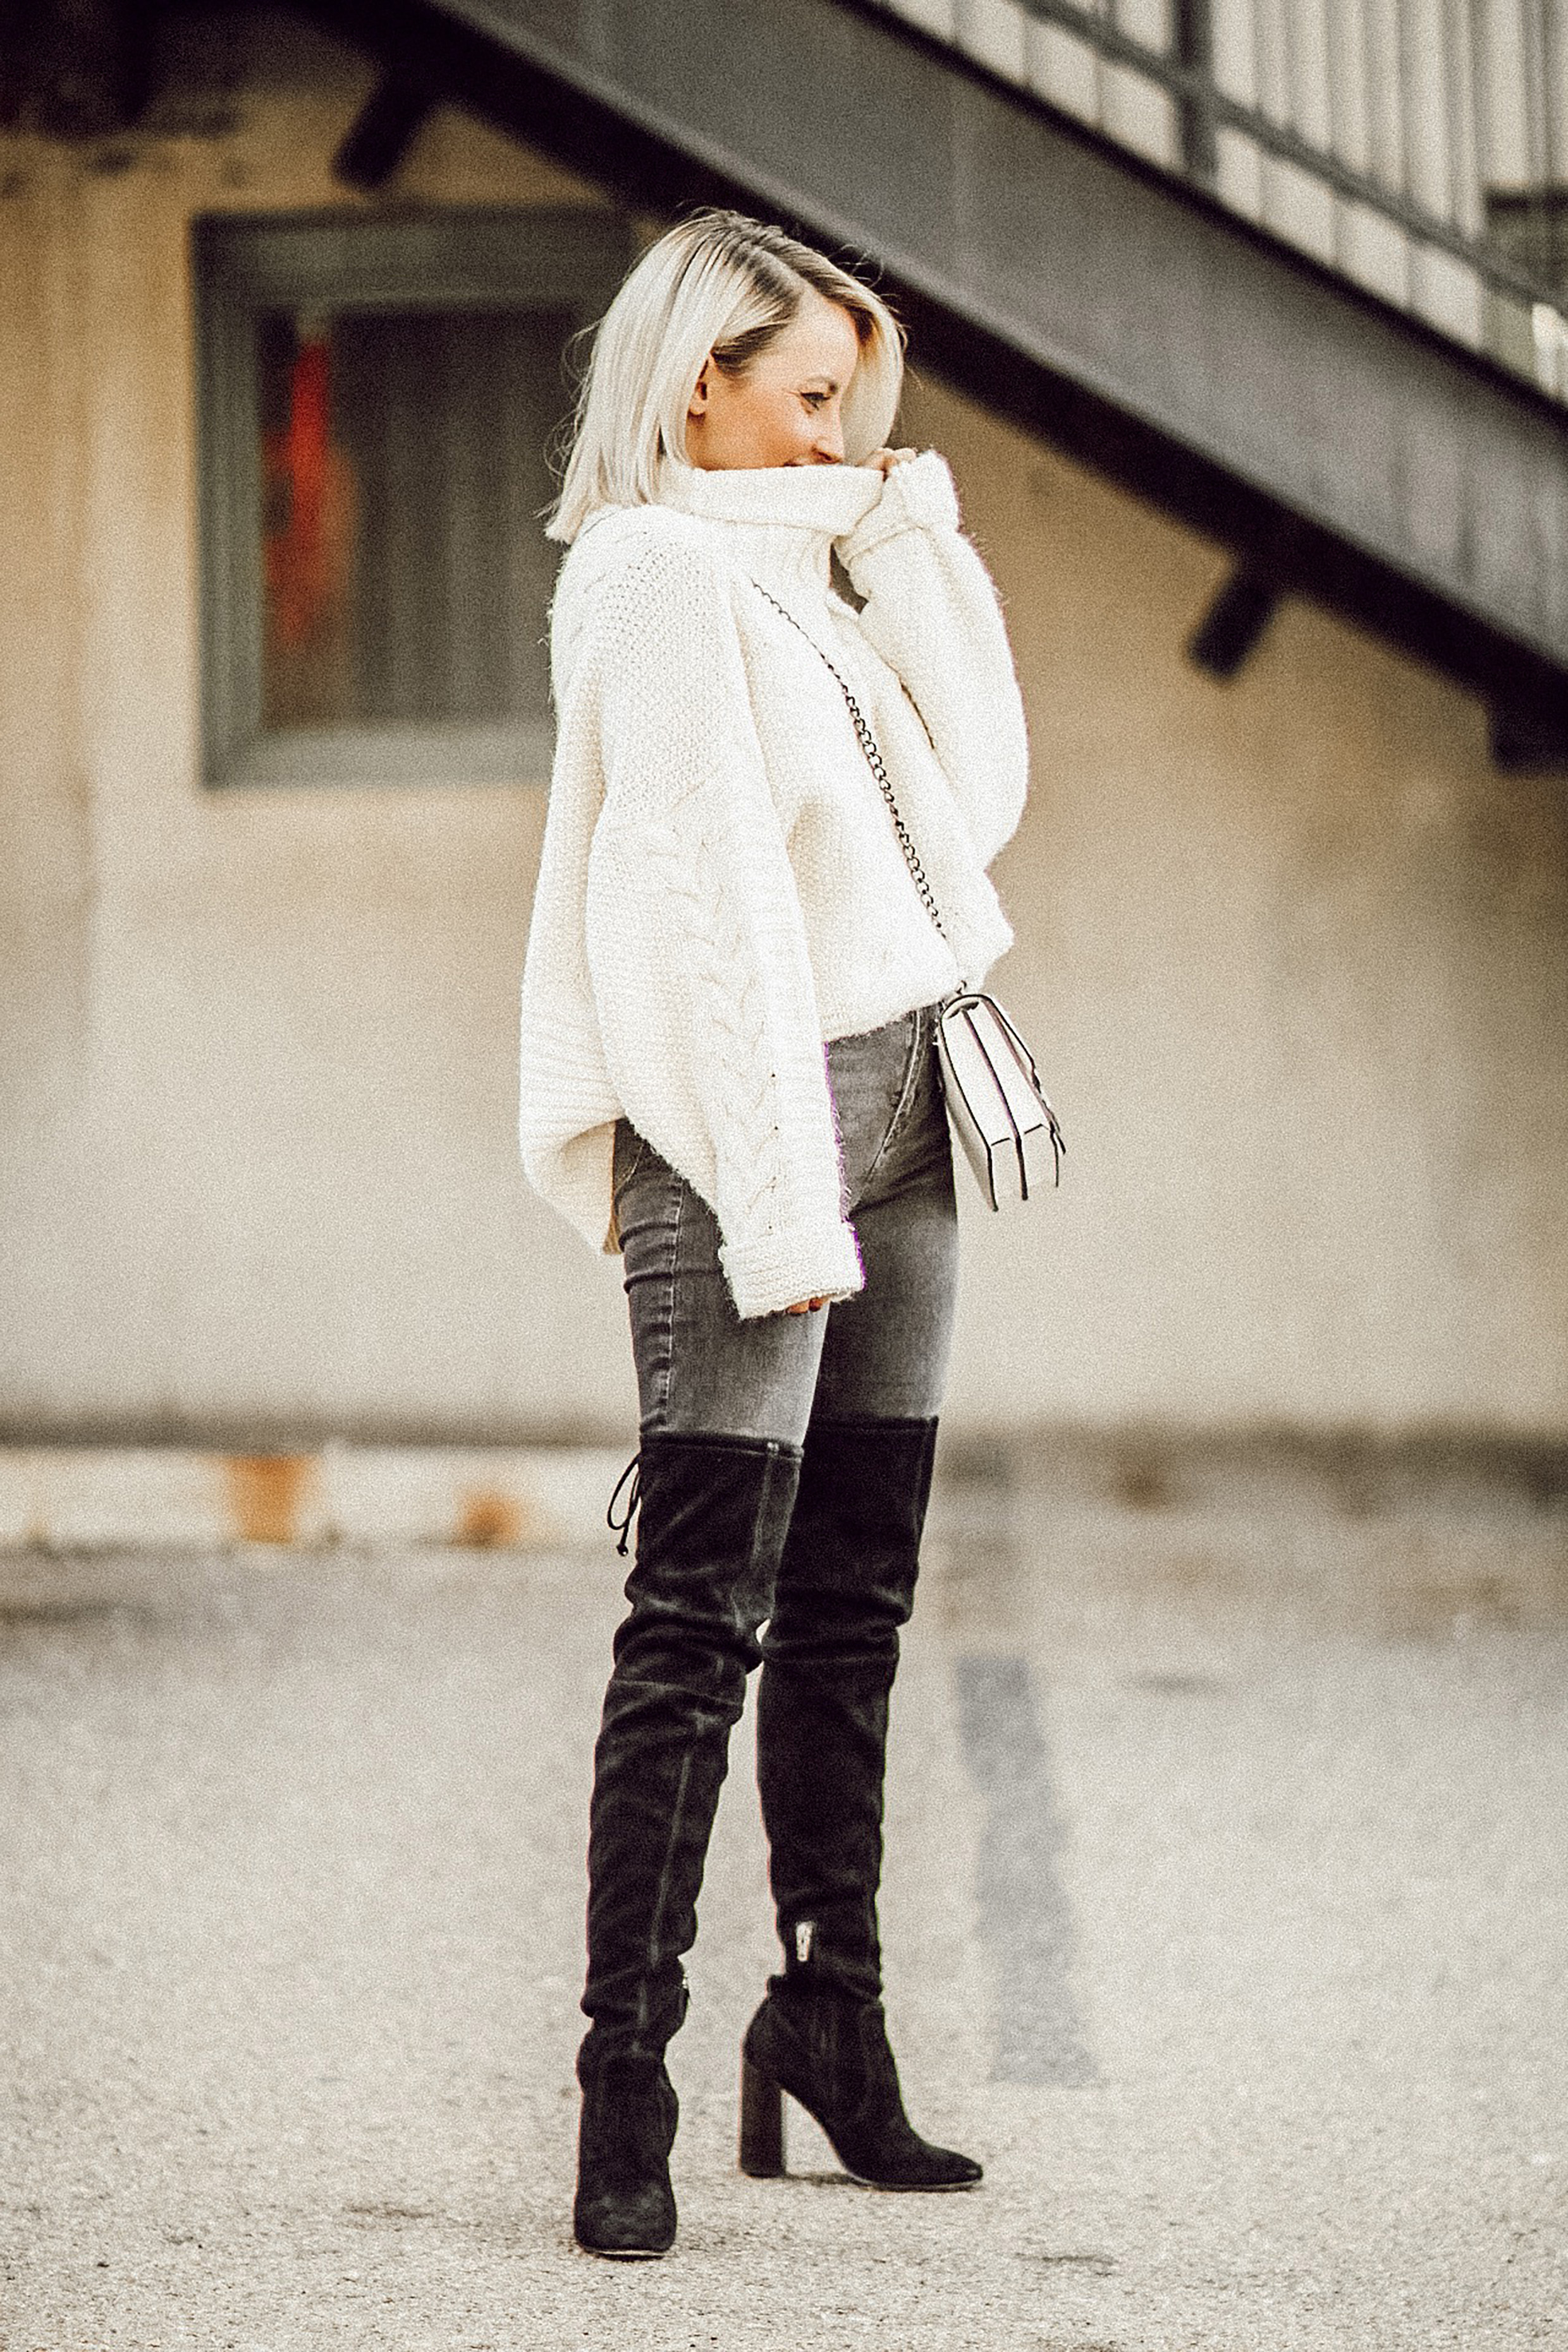 Alena Gidenko of modaprints.com shares her favorite cozy sweaters under $50